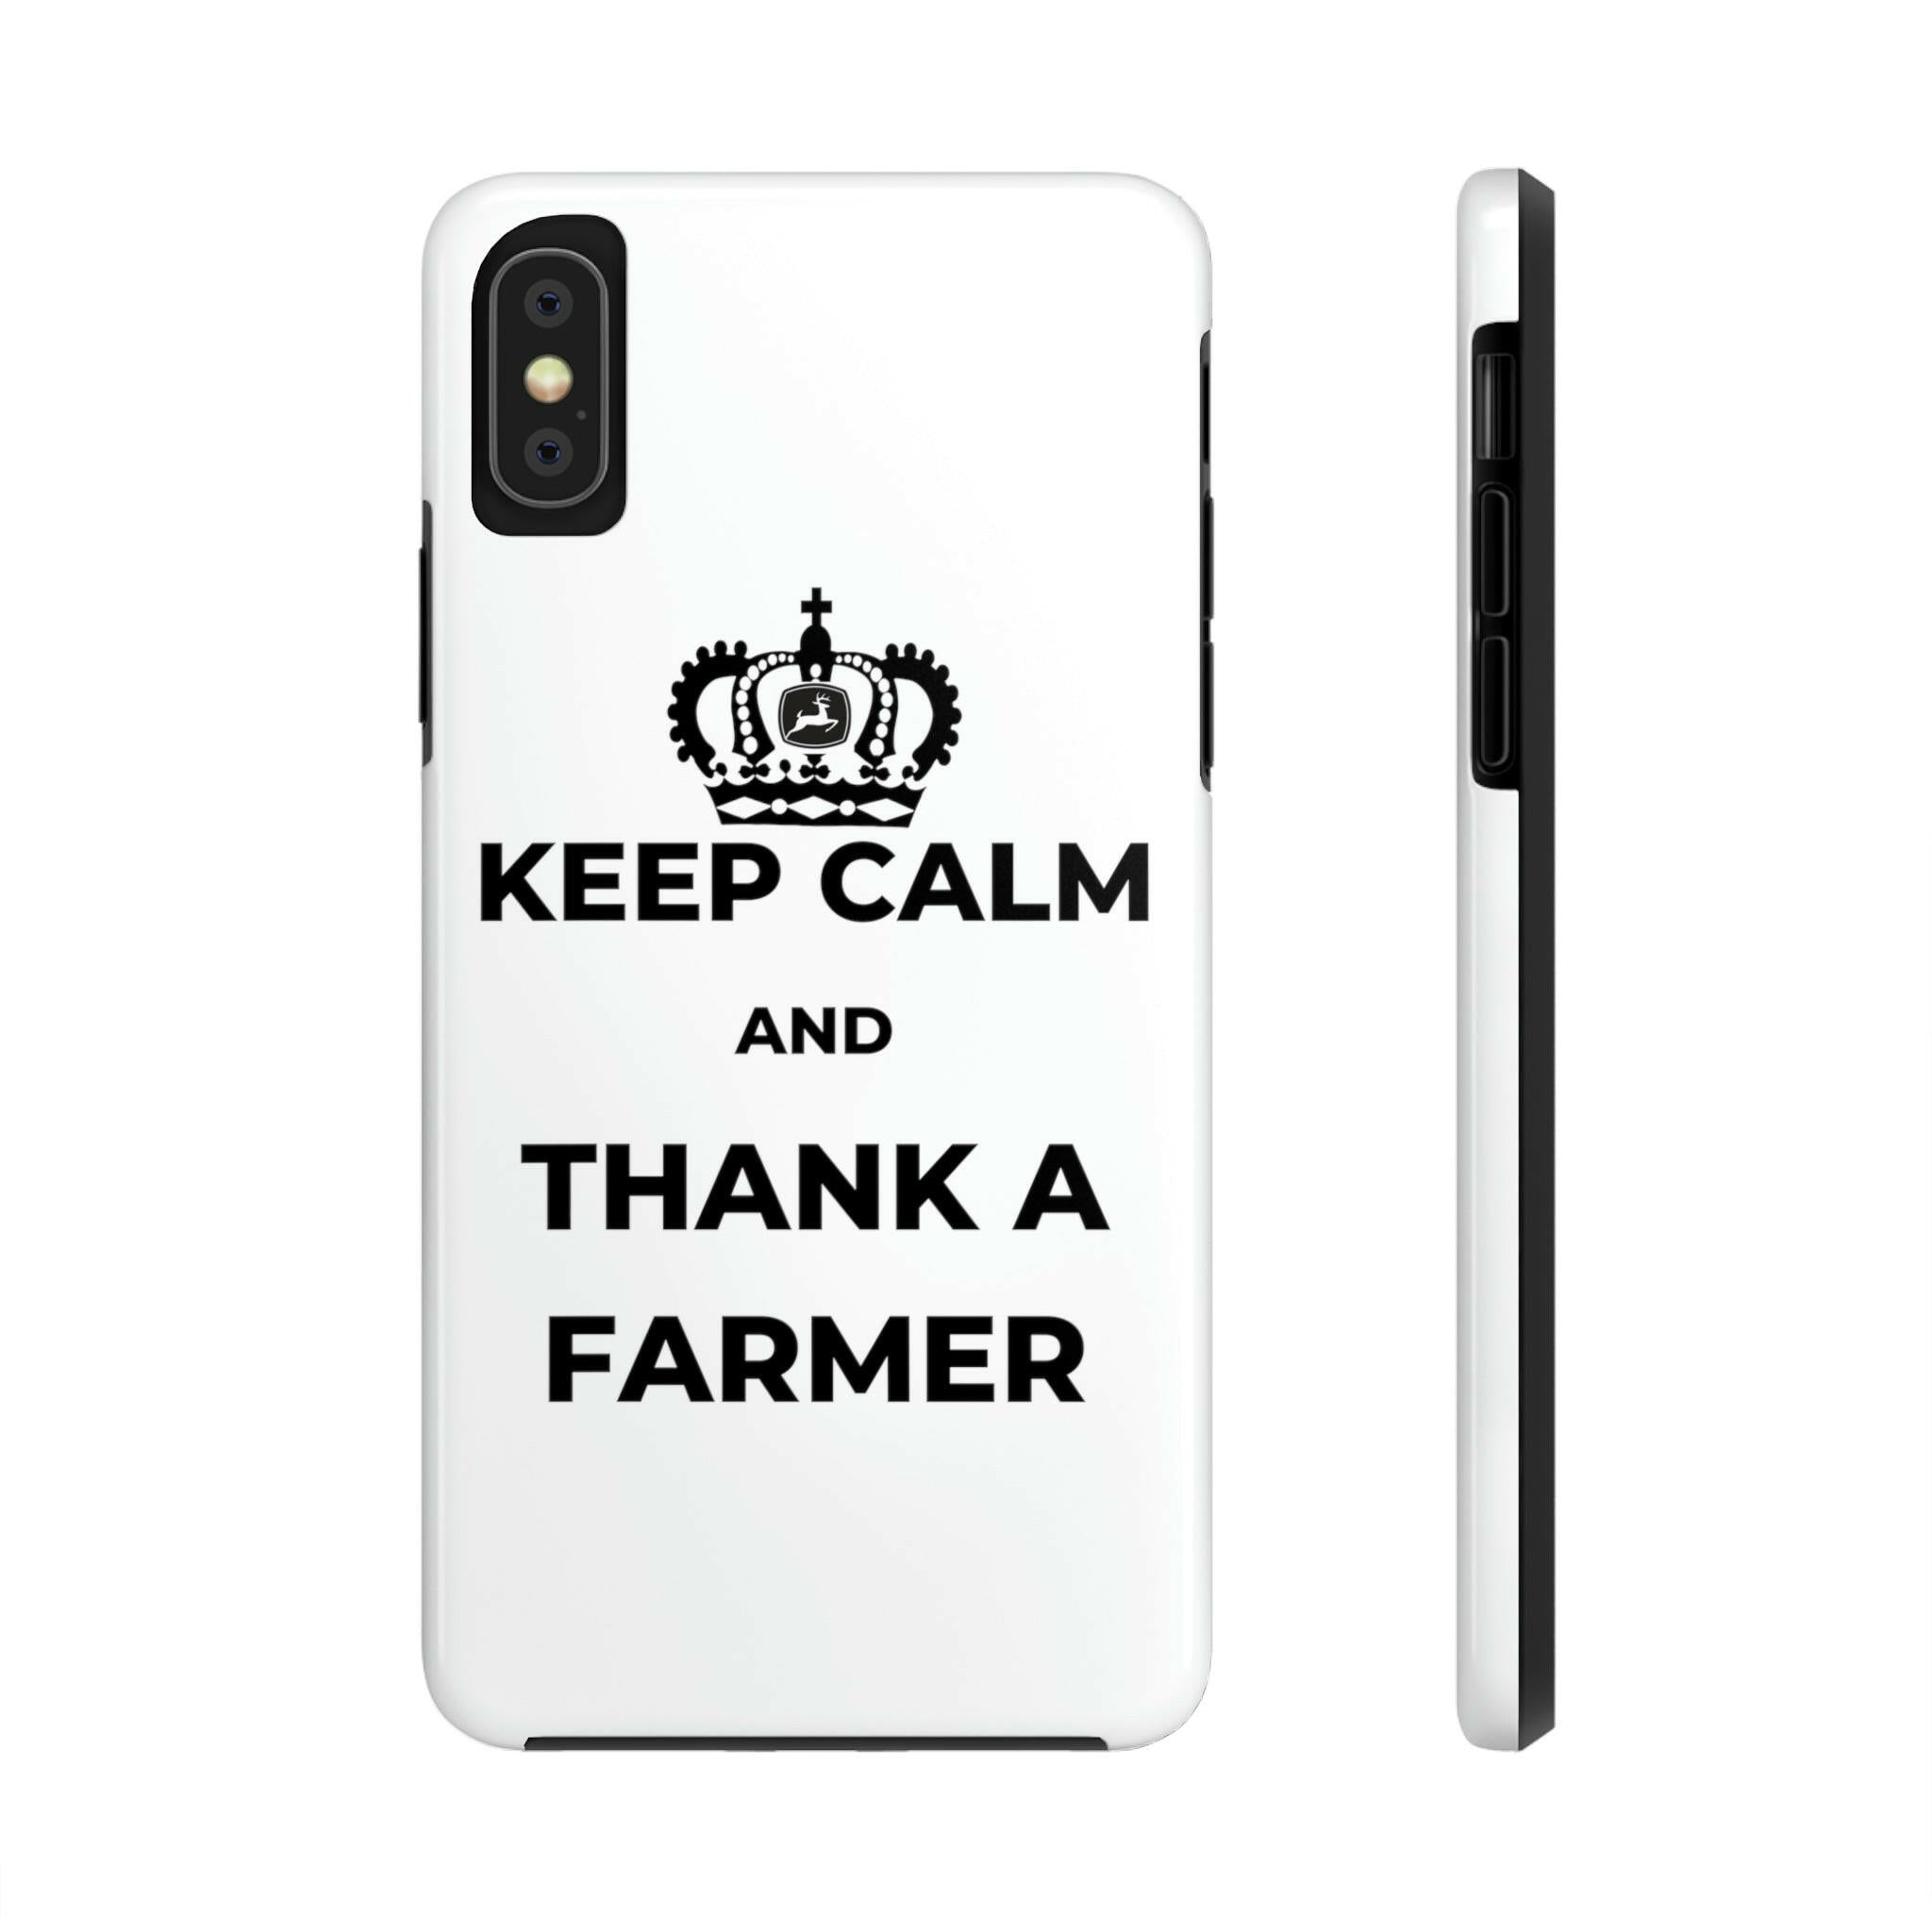 Keep Calm and Thank a Farmer - Tough iPhone Cases.